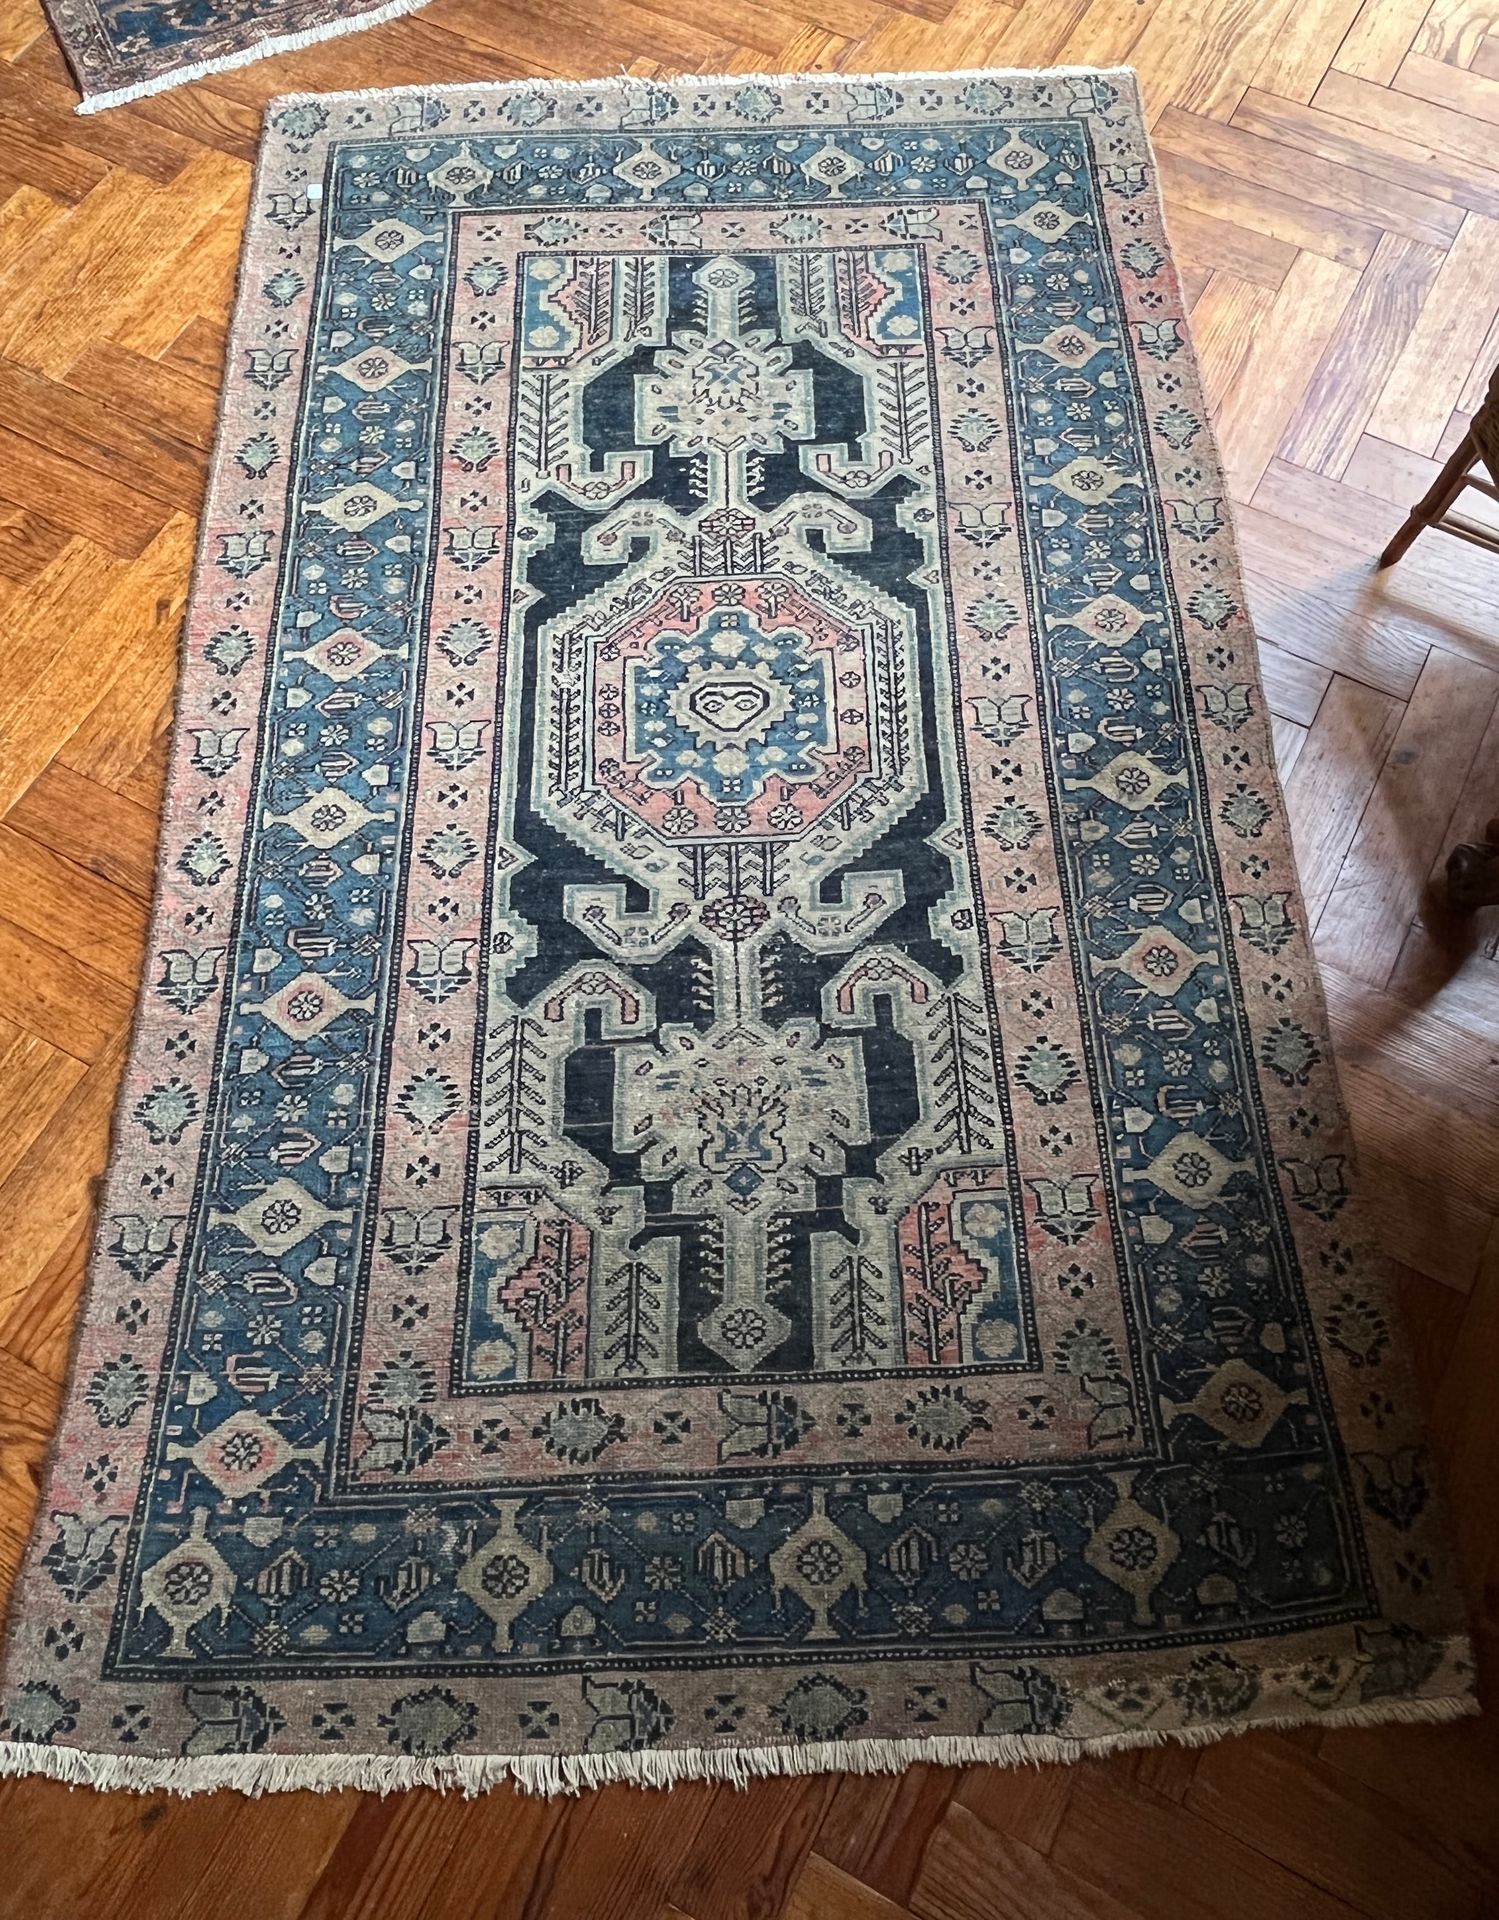 Null 86 一套三件羊毛地毯，主要来自土耳其斯坦。

都是蓝色背景上的几何图案。

磨损、晒伤